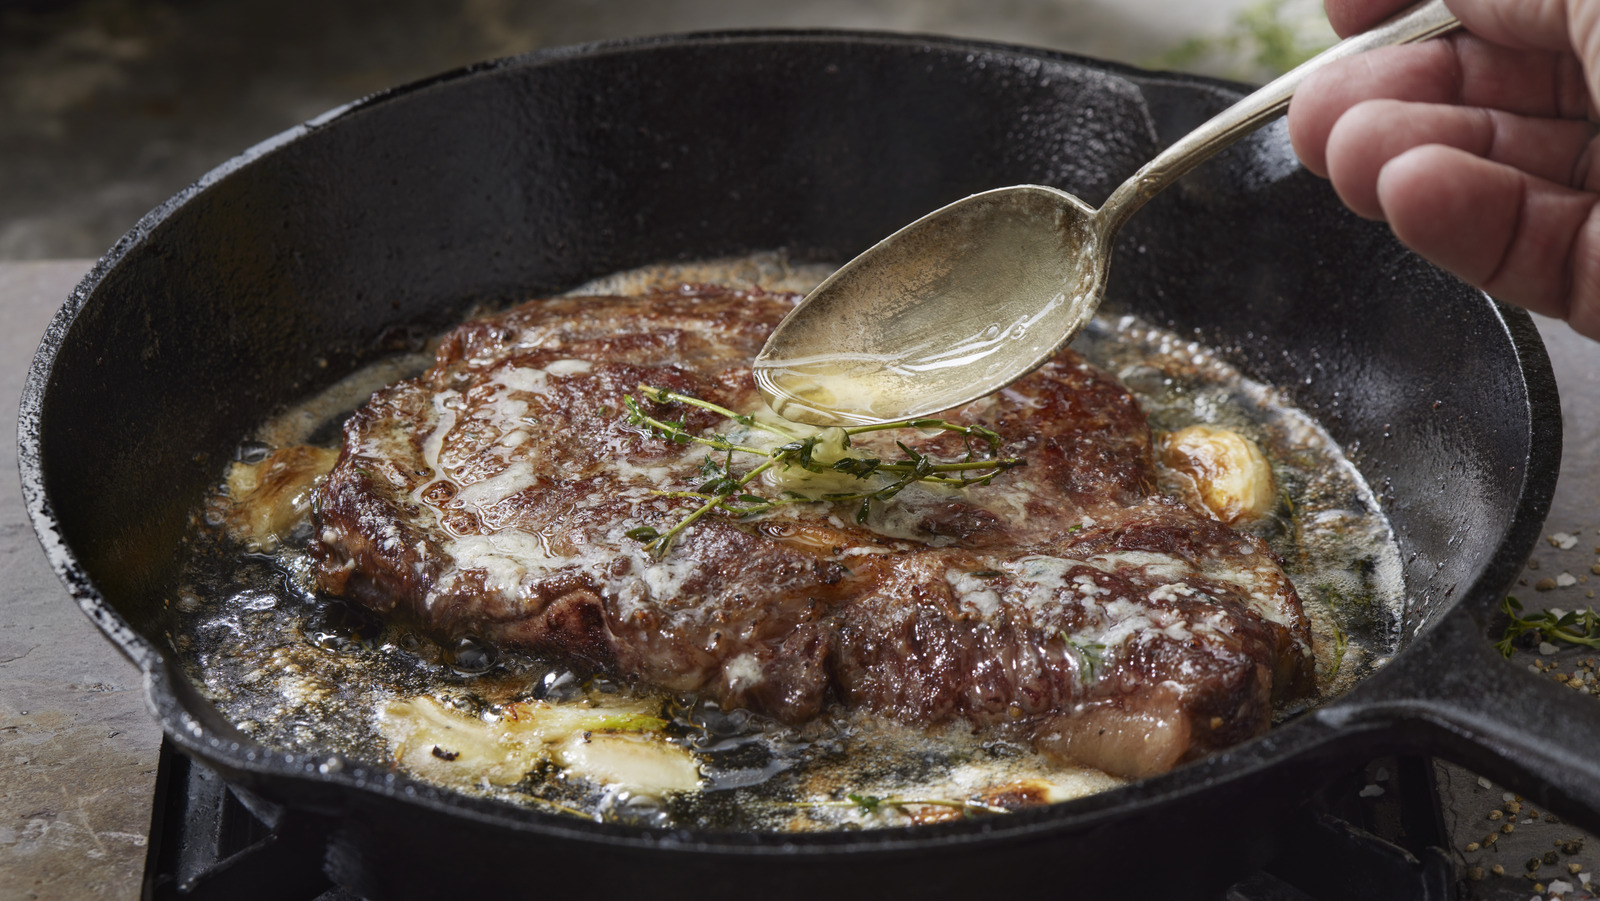 https://www.tastingtable.com/img/gallery/brown-butter-is-the-secret-to-better-basted-steak/l-intro-1690926087.jpg